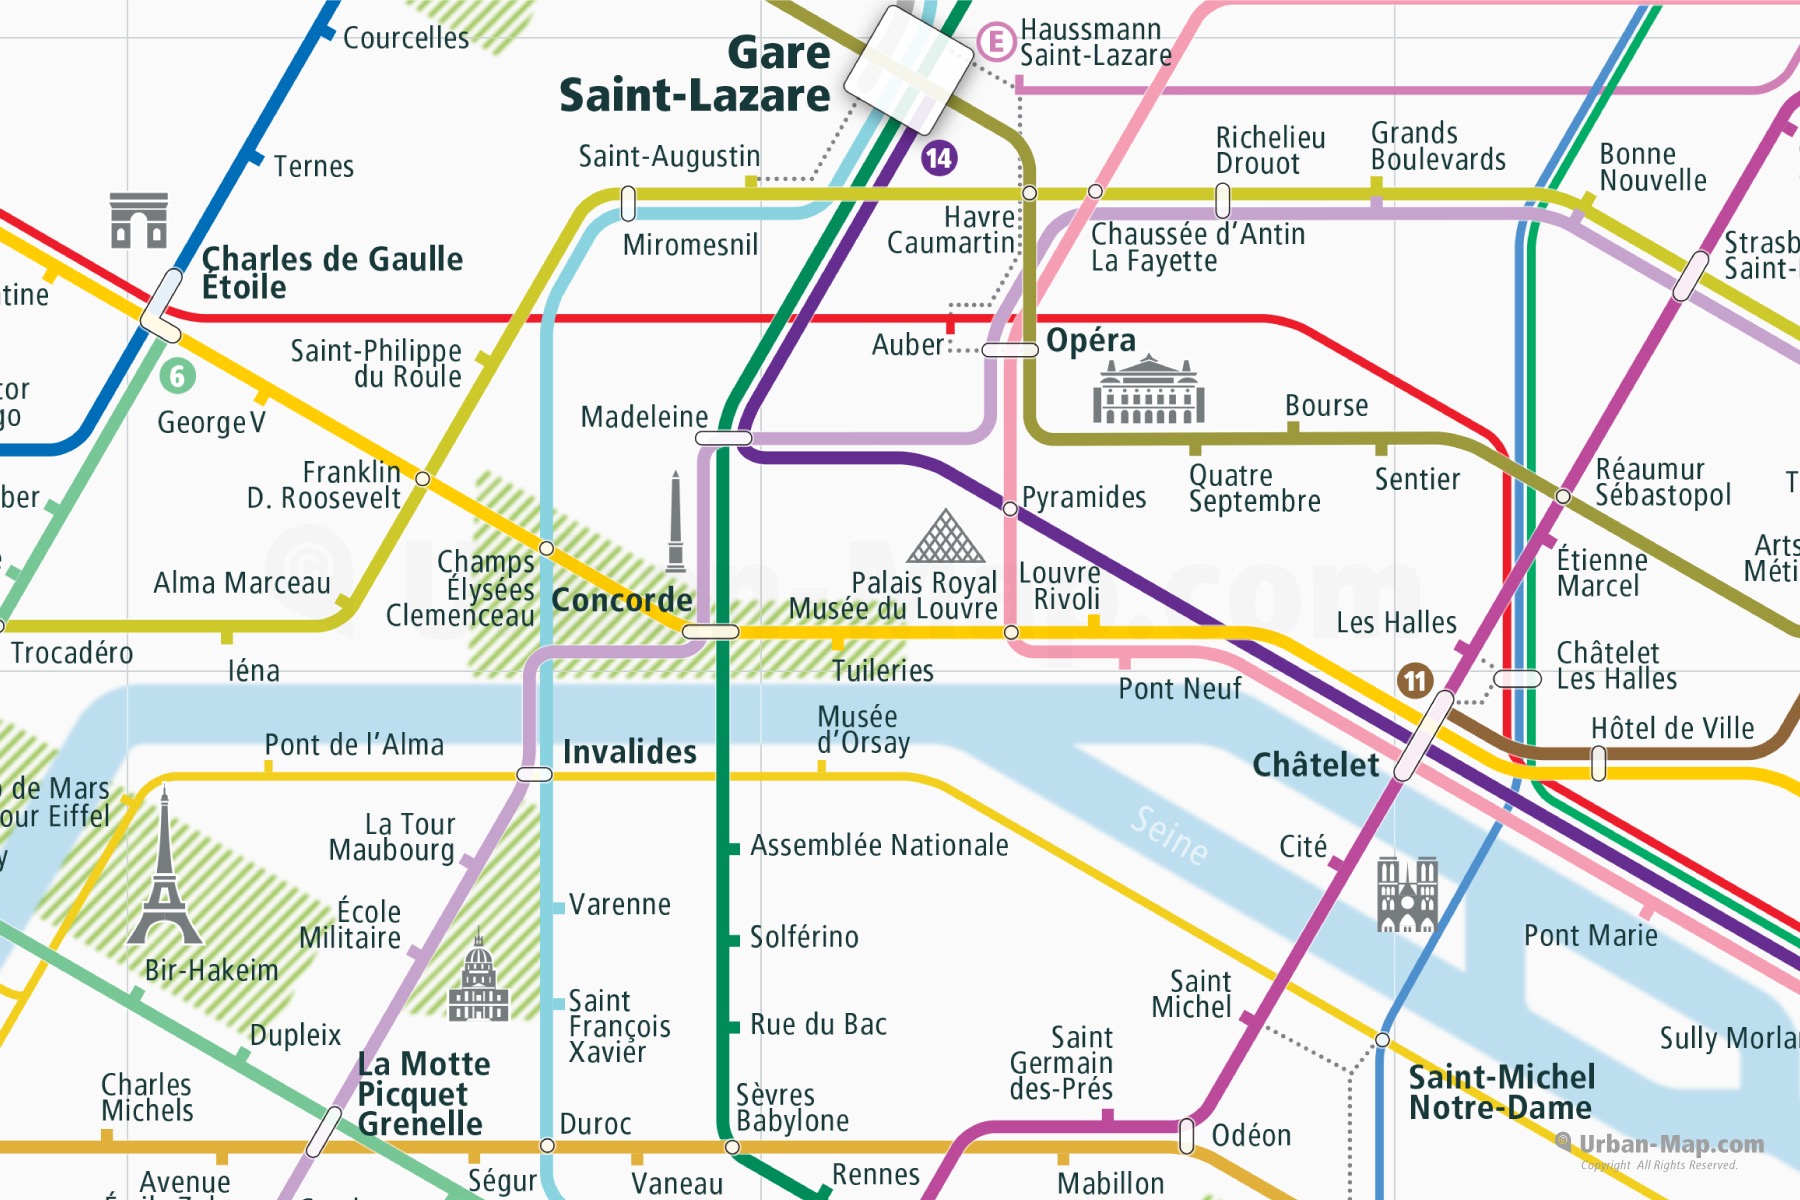 Paris City Rail Map shows the train and public transportation routes of - Close-Up